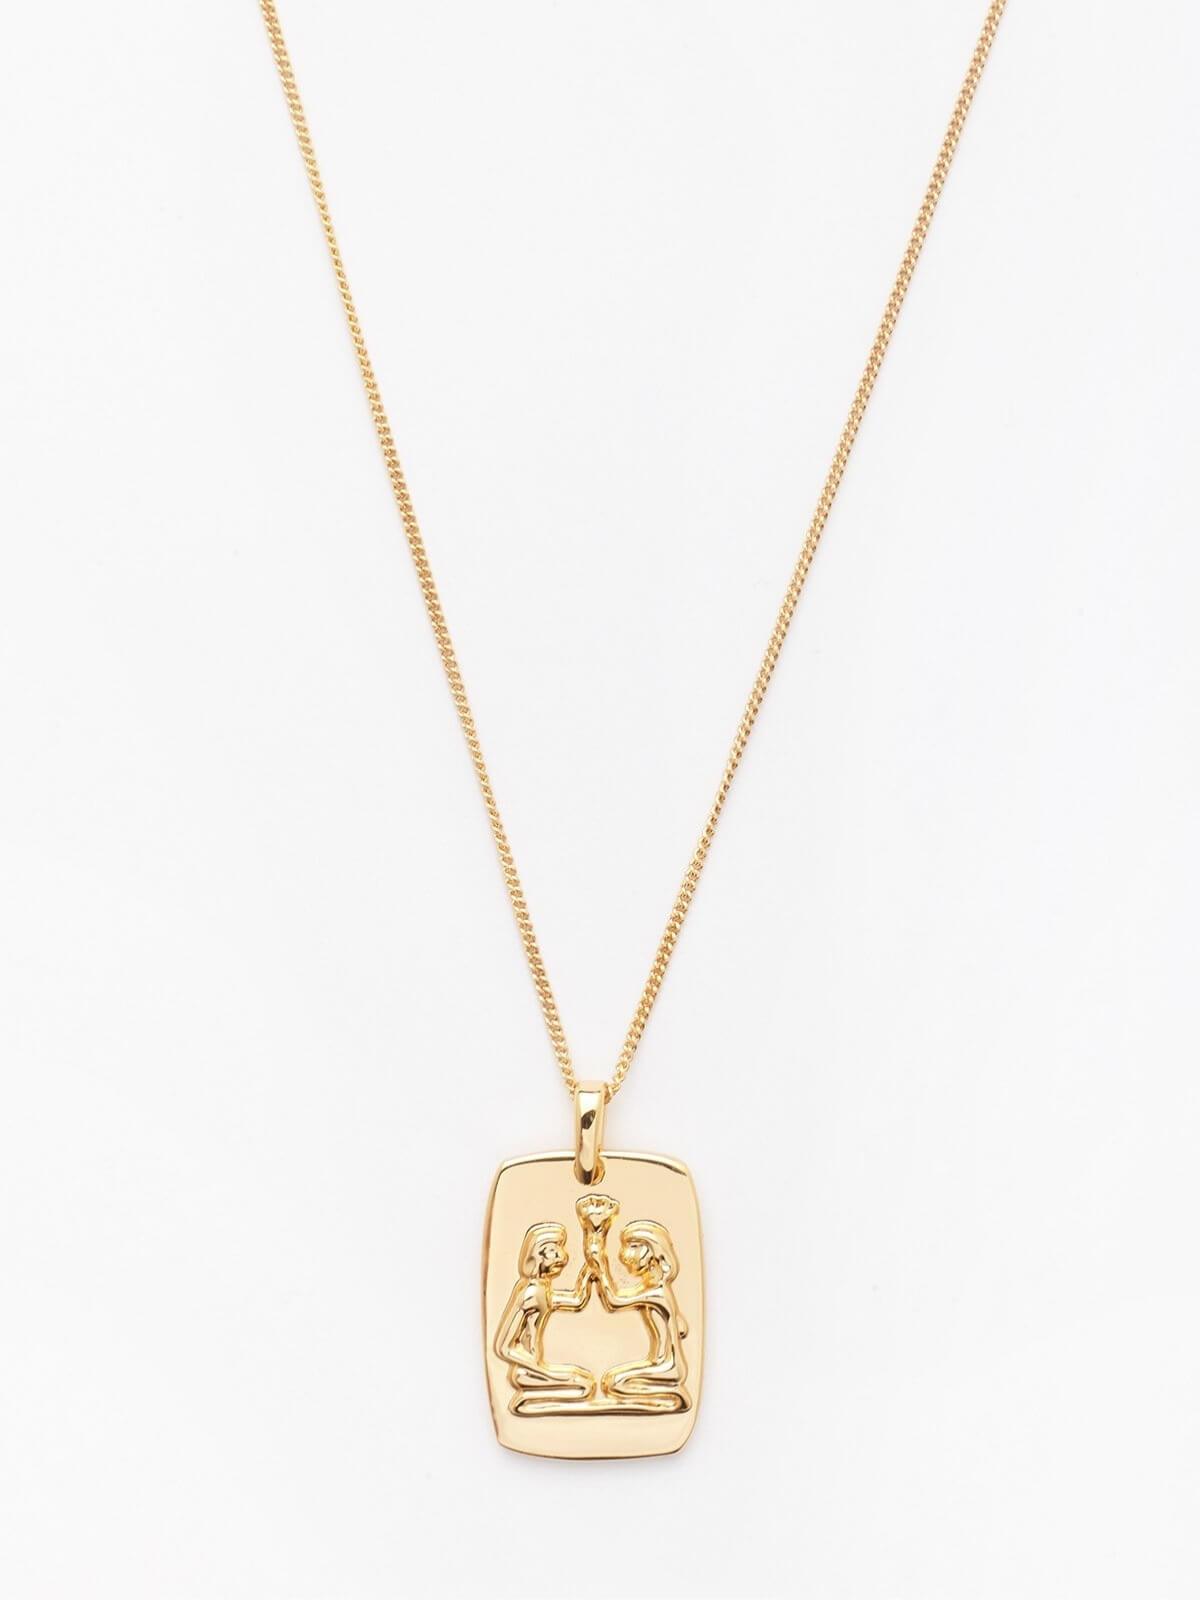 Zodiac Gemini Gold Pendant Necklaces Reliquia 